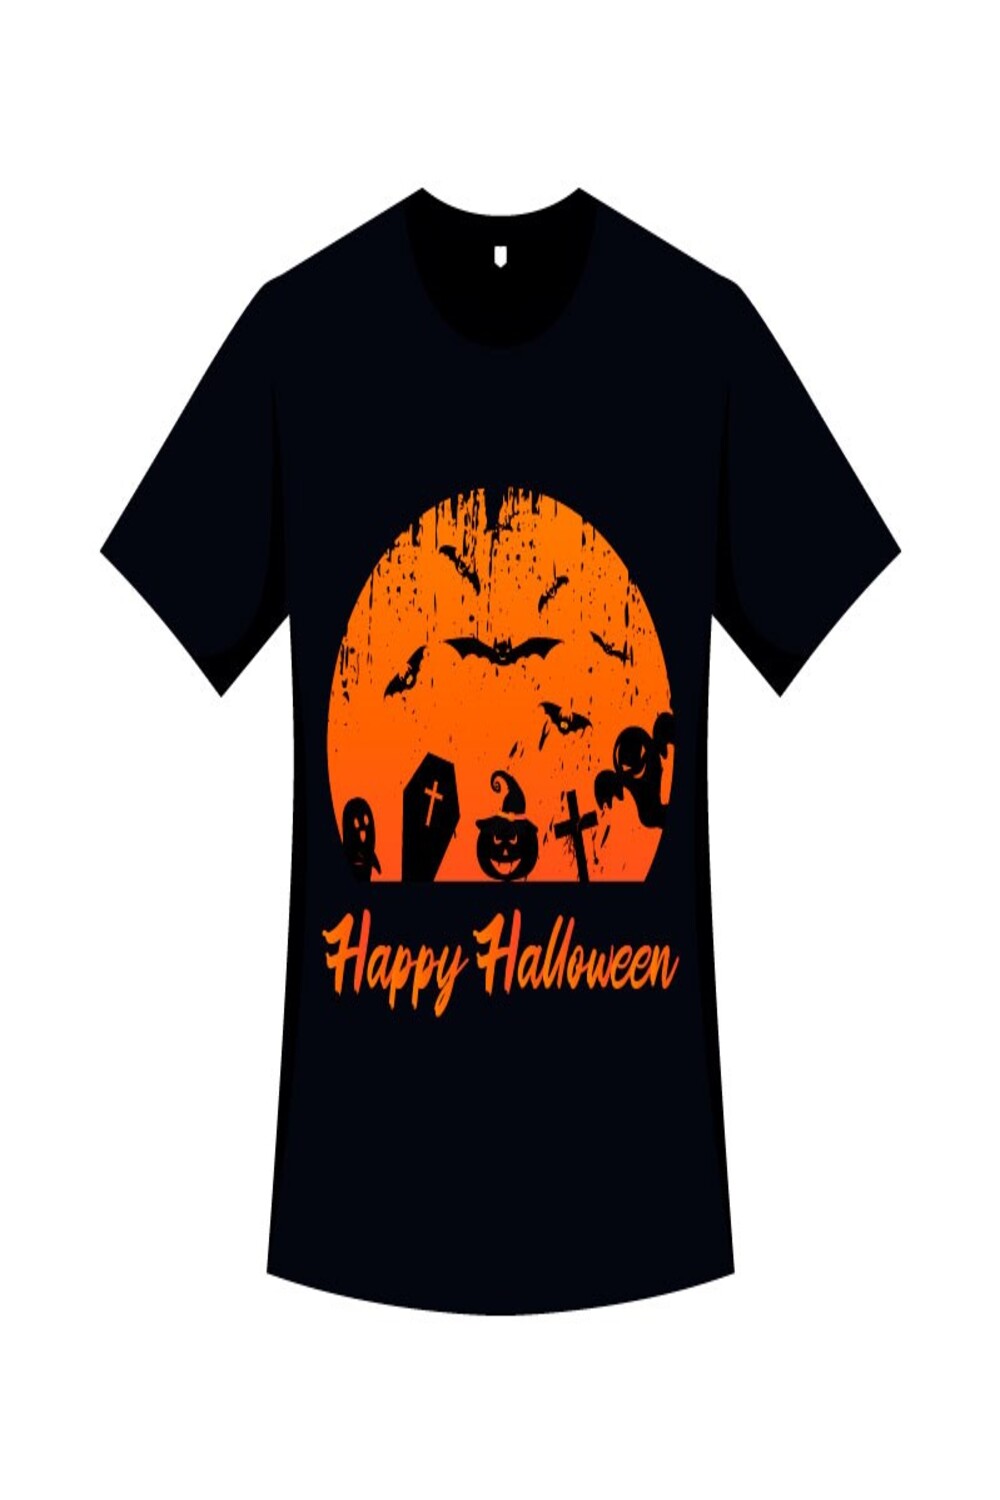 Spooky T-shirt Design for Halloween pinterest image.